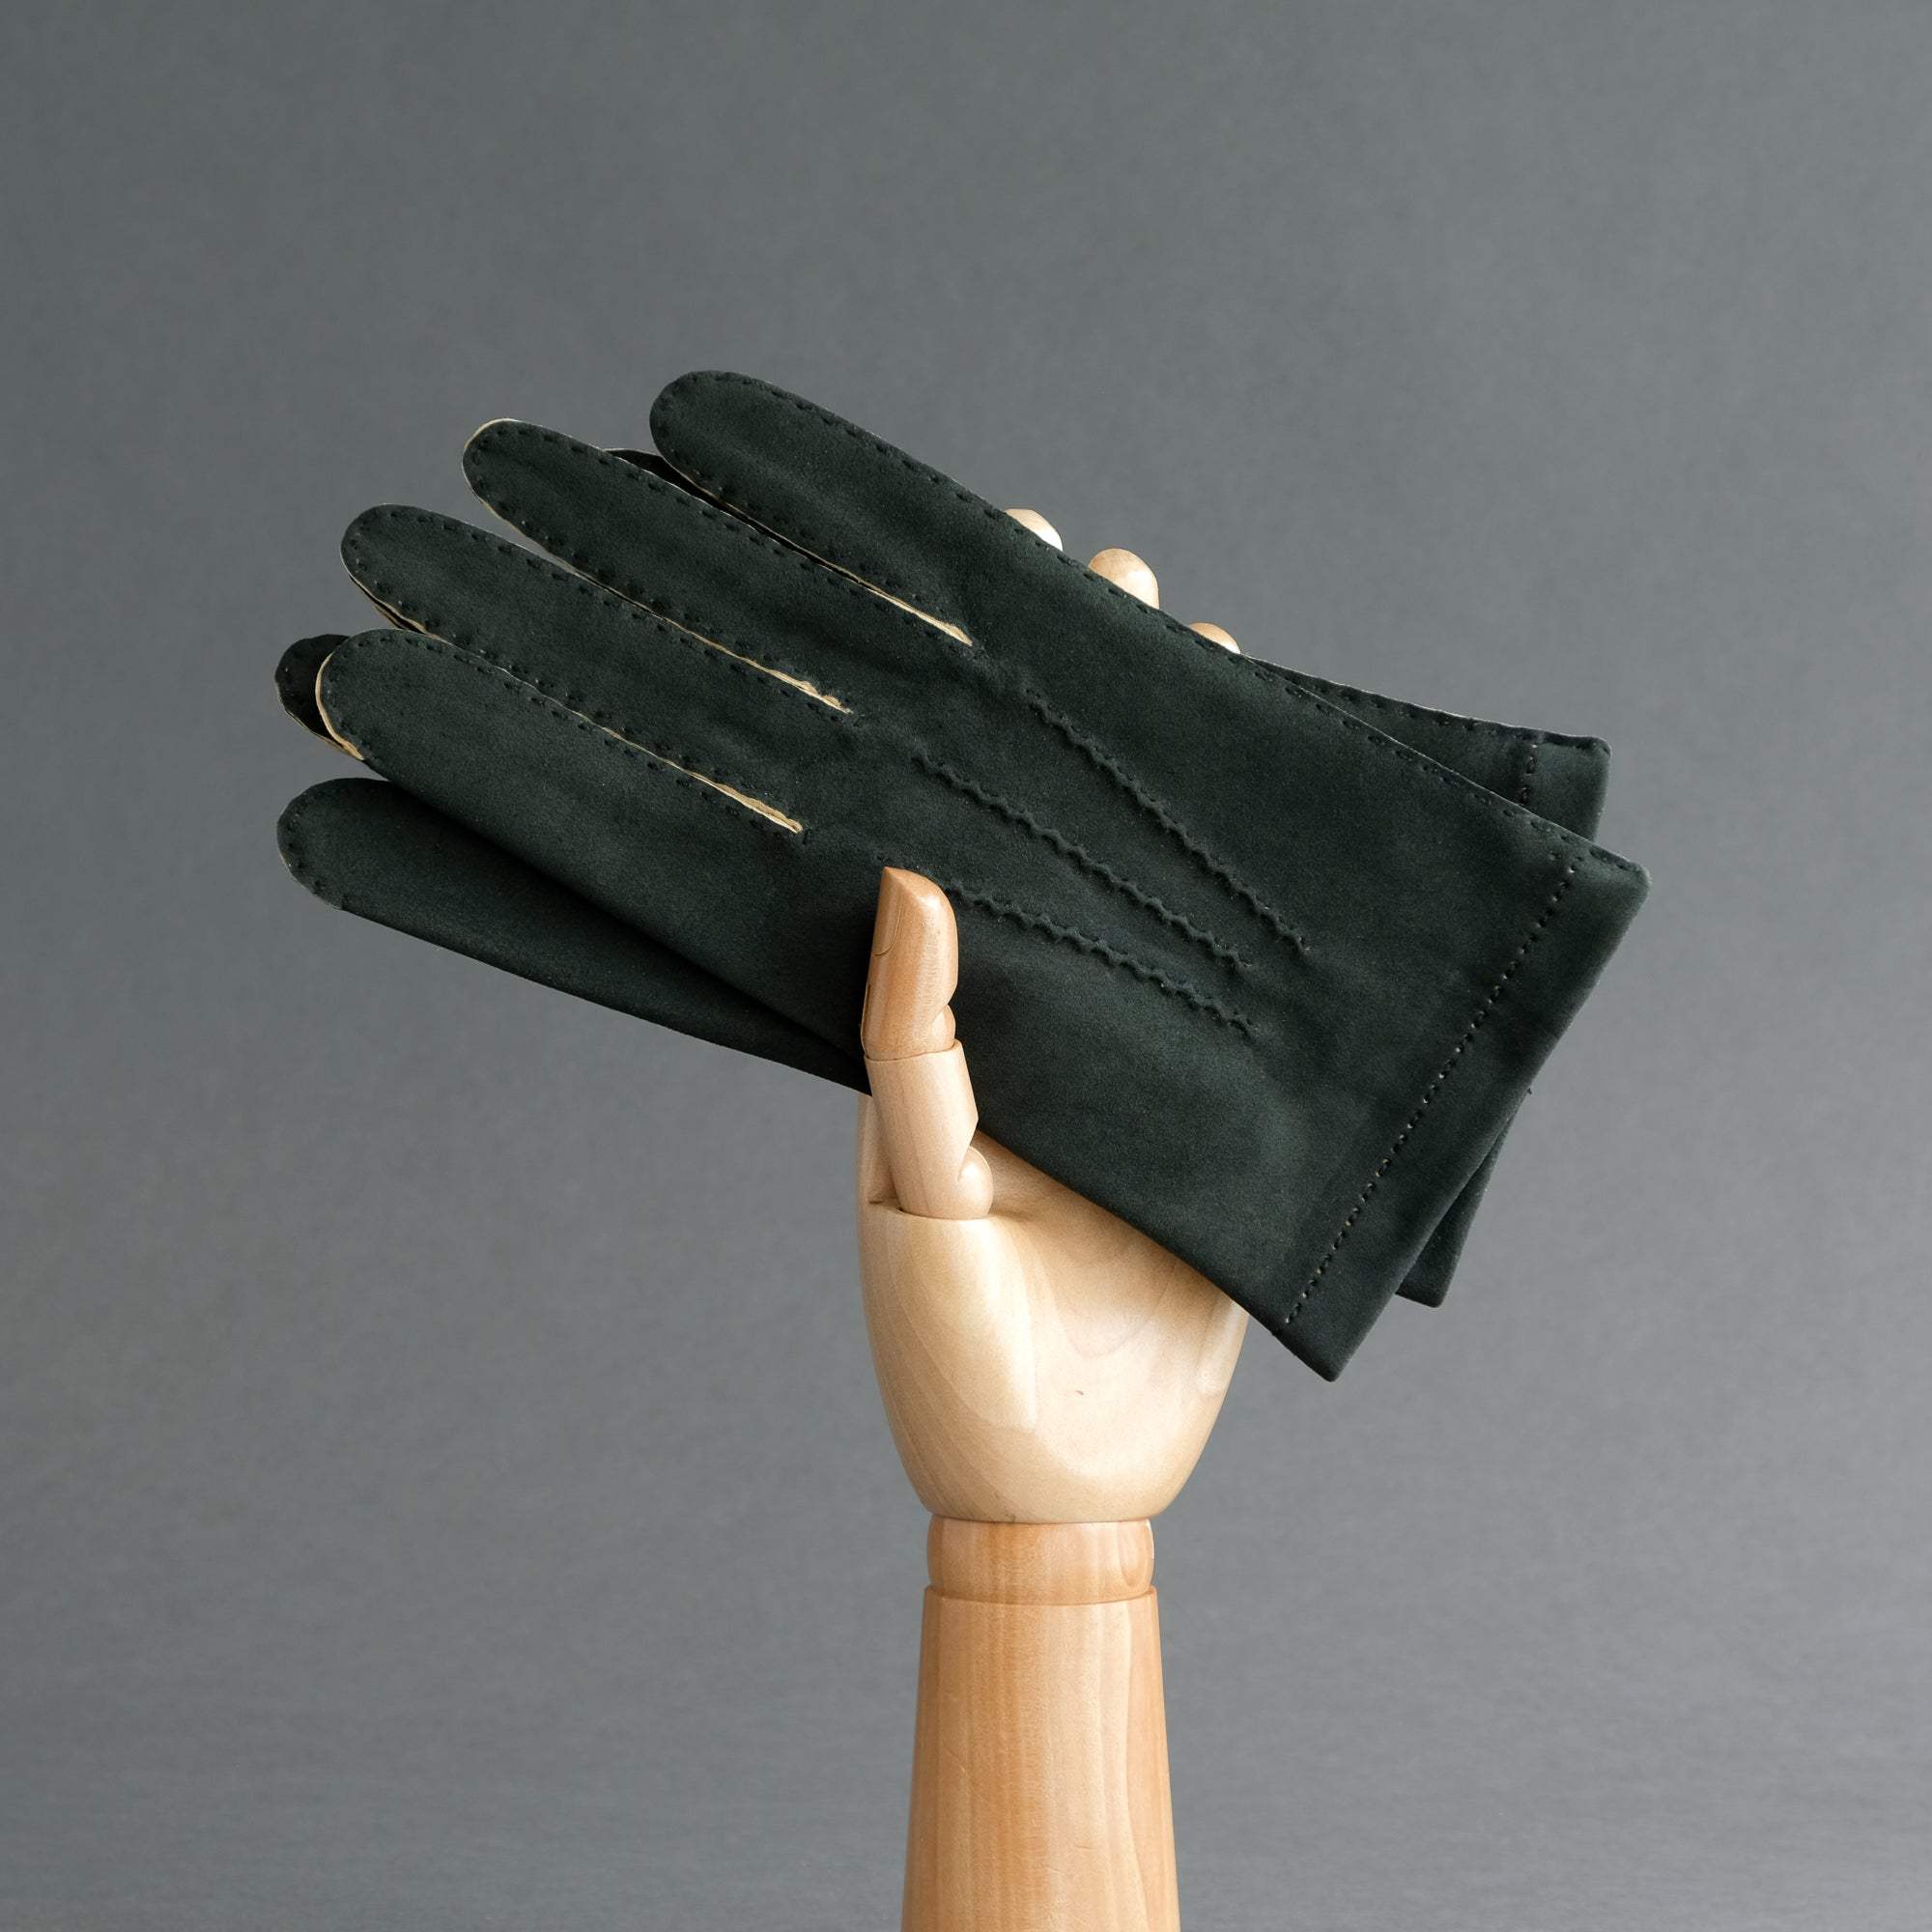 Gentlemen's Hand Sewn Unlined Gloves from Black/Green Doeskin - TR Handschuhe Wien - Thomas Riemer Handmade Gloves